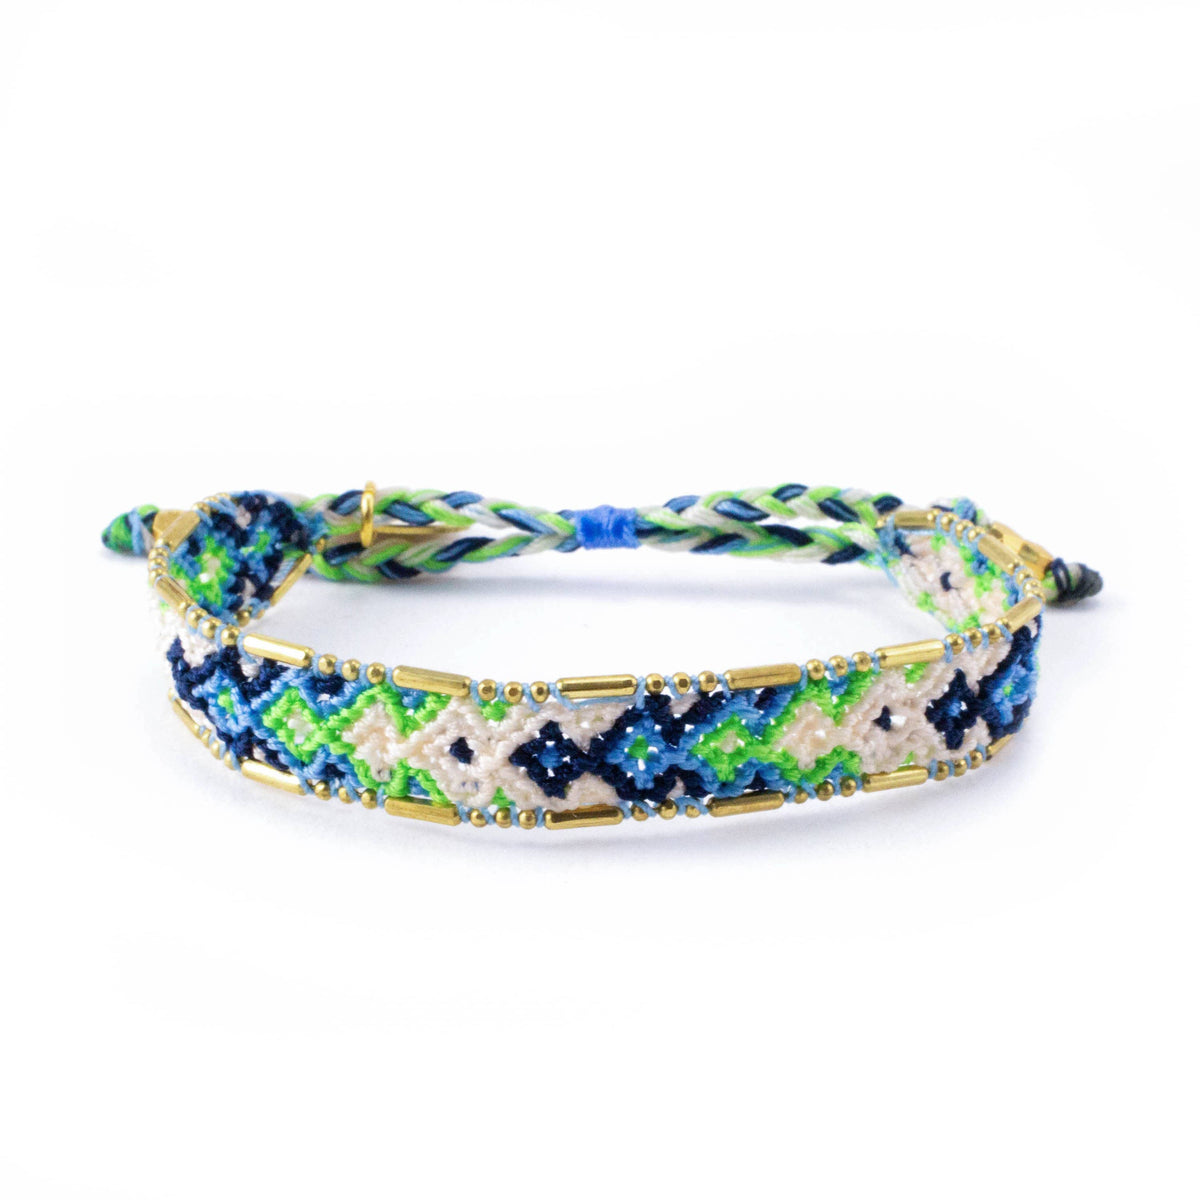 Water Lilies Women's Fairtrade Beaded Bracelet, Blue and Green Fabric Bracelet, Big Bead Bracelet, Boho Bracelet, Bead Bracelets for Women